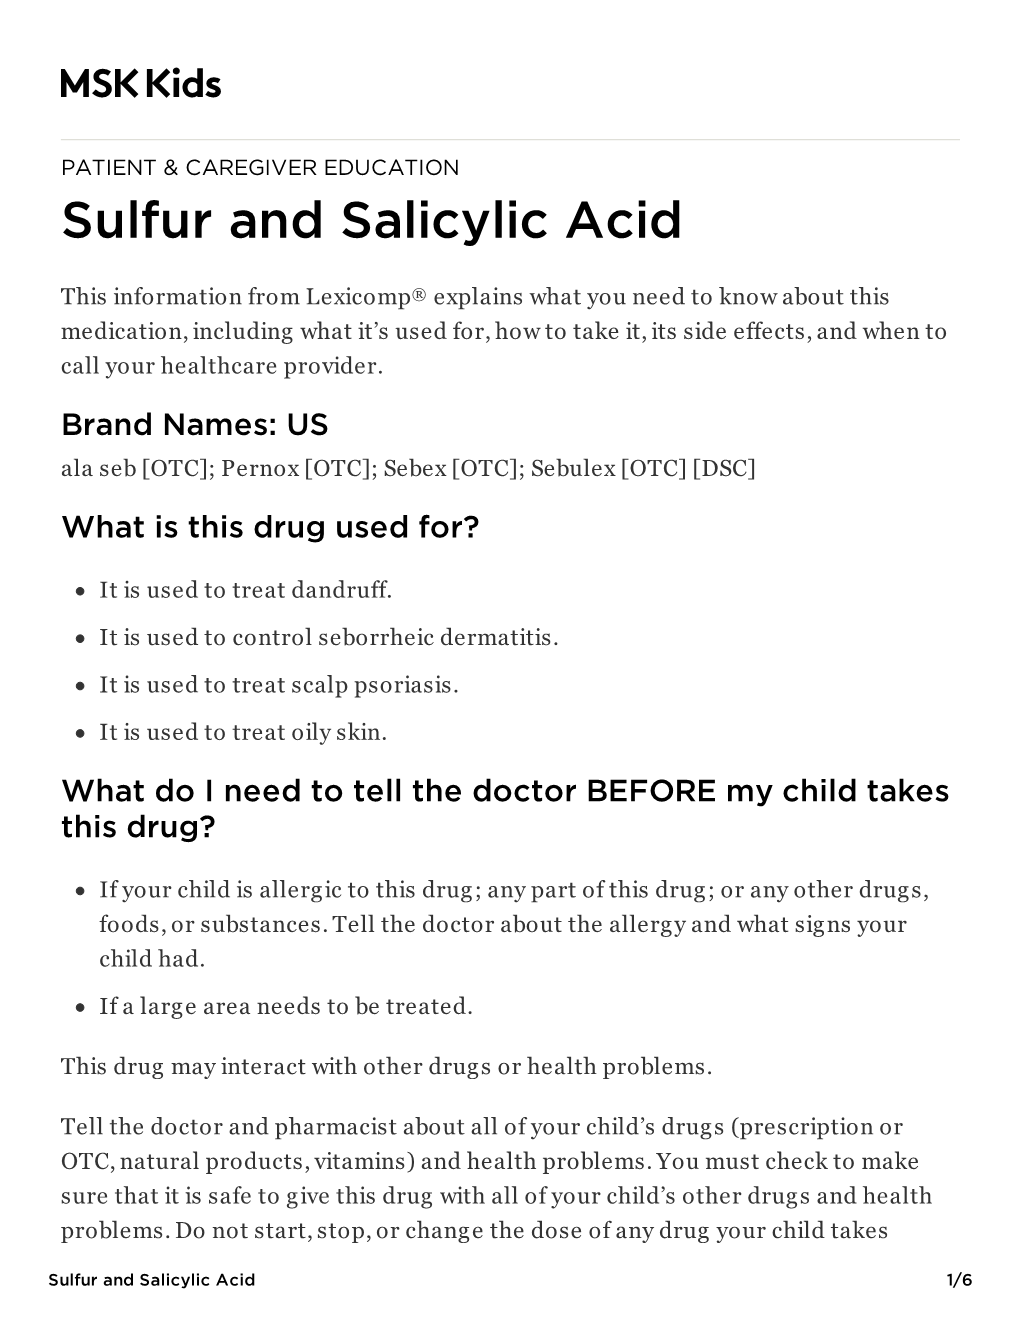 Sulfur and Salicylic Acid: Pediatric Medication